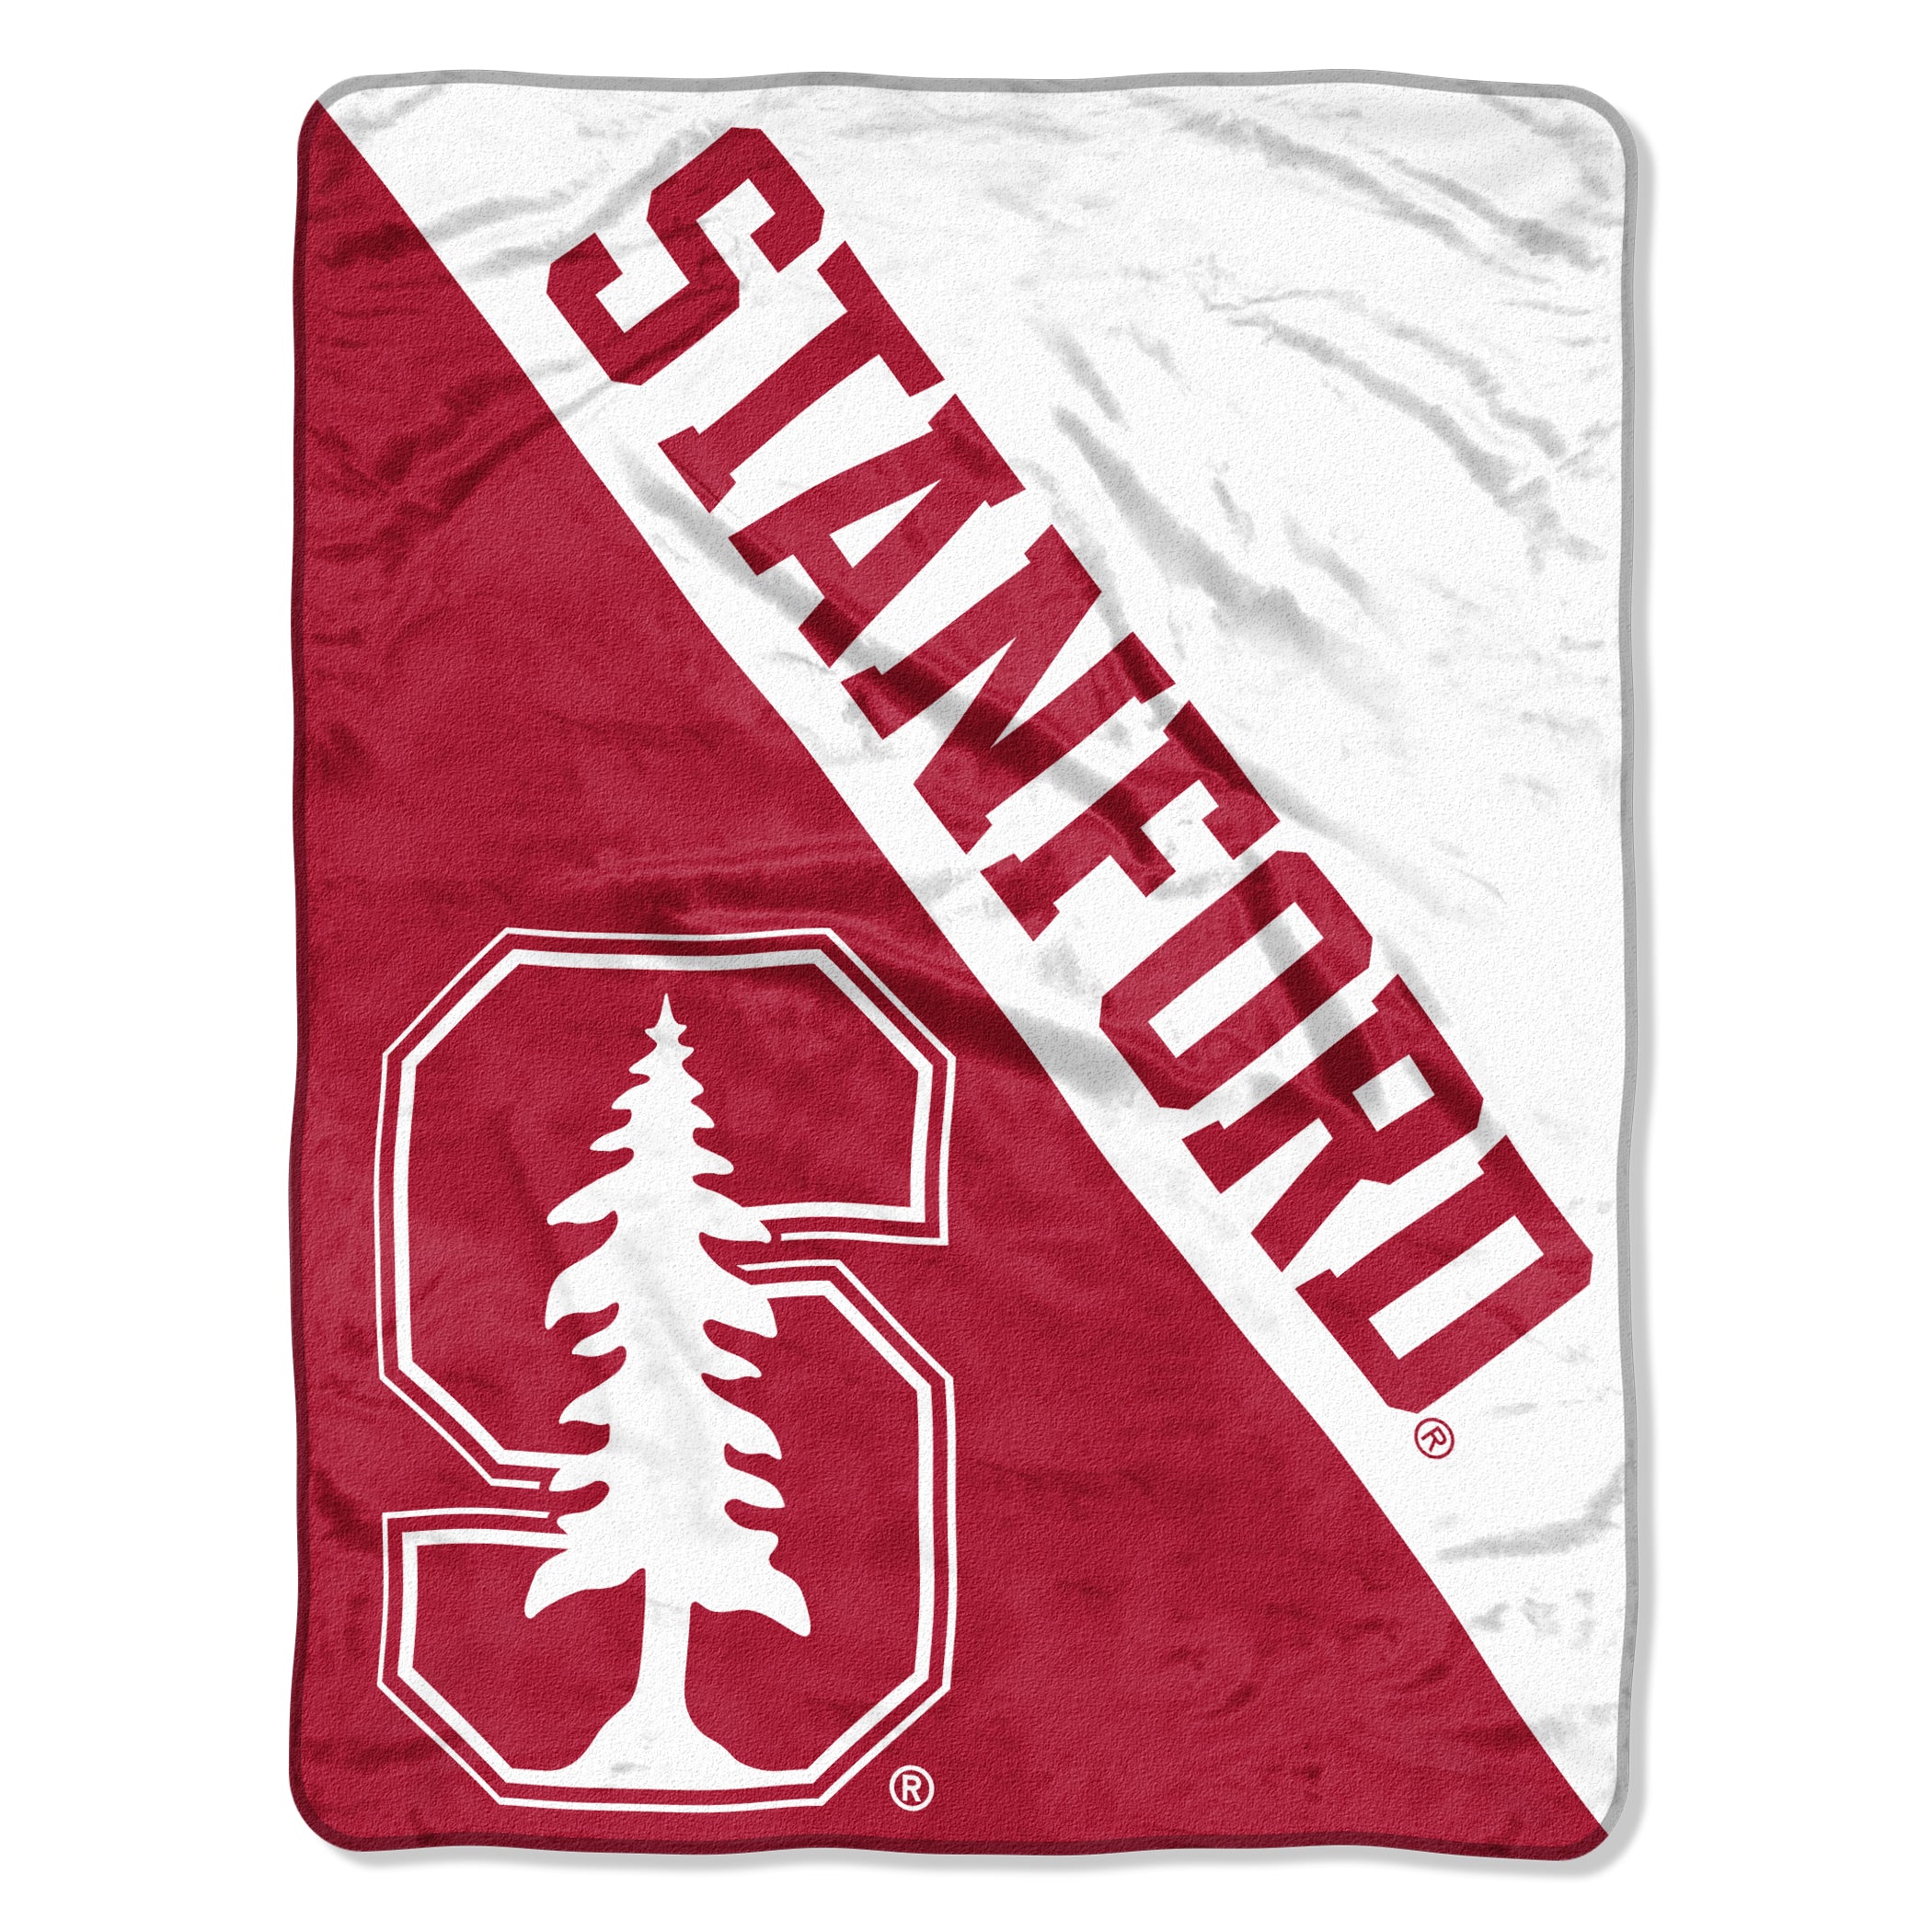 Stanford Cardinal Blanket 46x60 Micro Raschel Halftone Design Rolled - Special Order